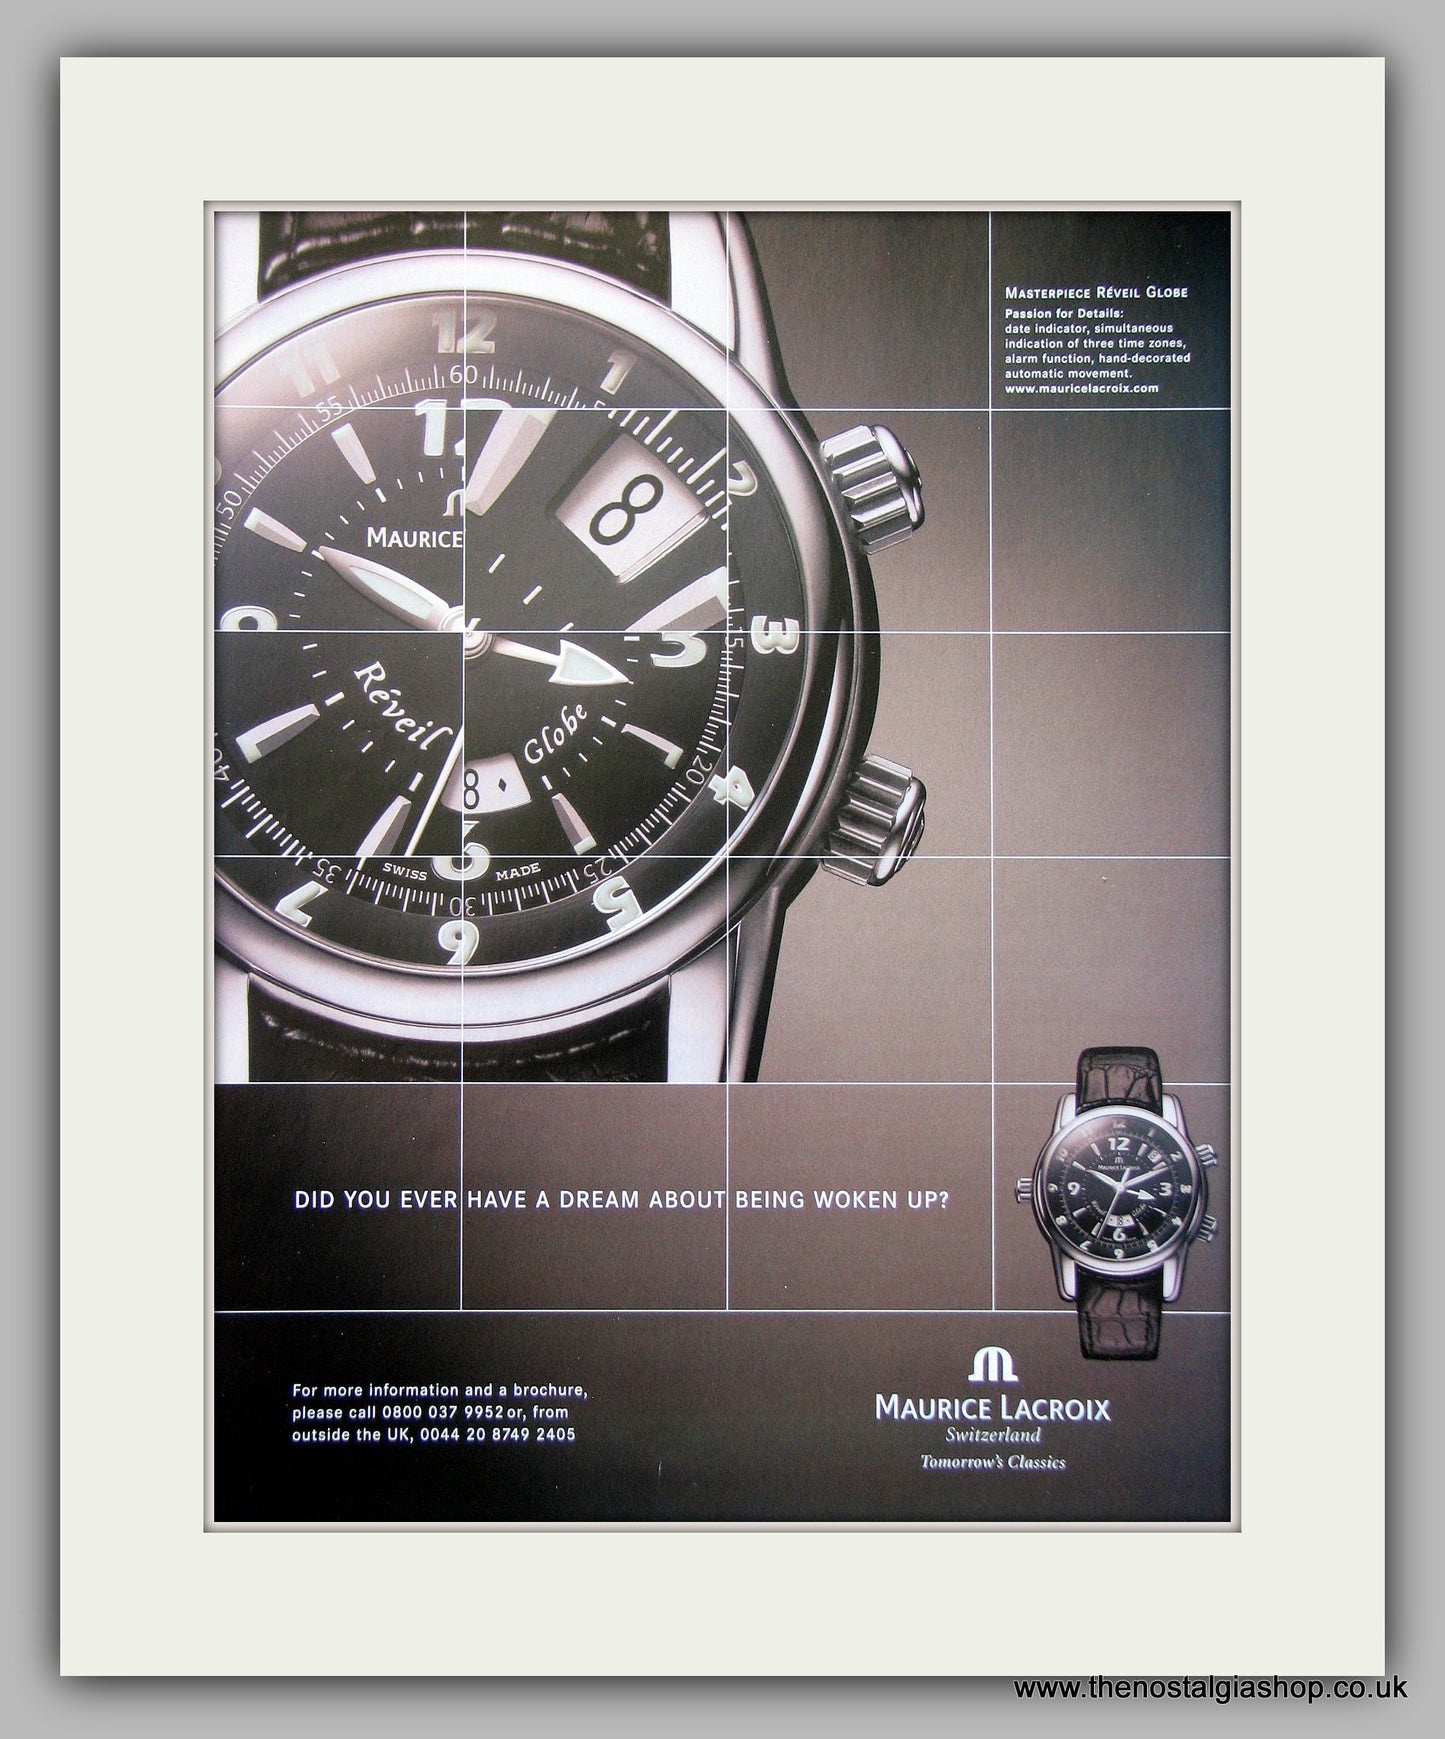 Maurice Lacroix Reveil Globe Watch Original Advert 2004 (ref AD6908)